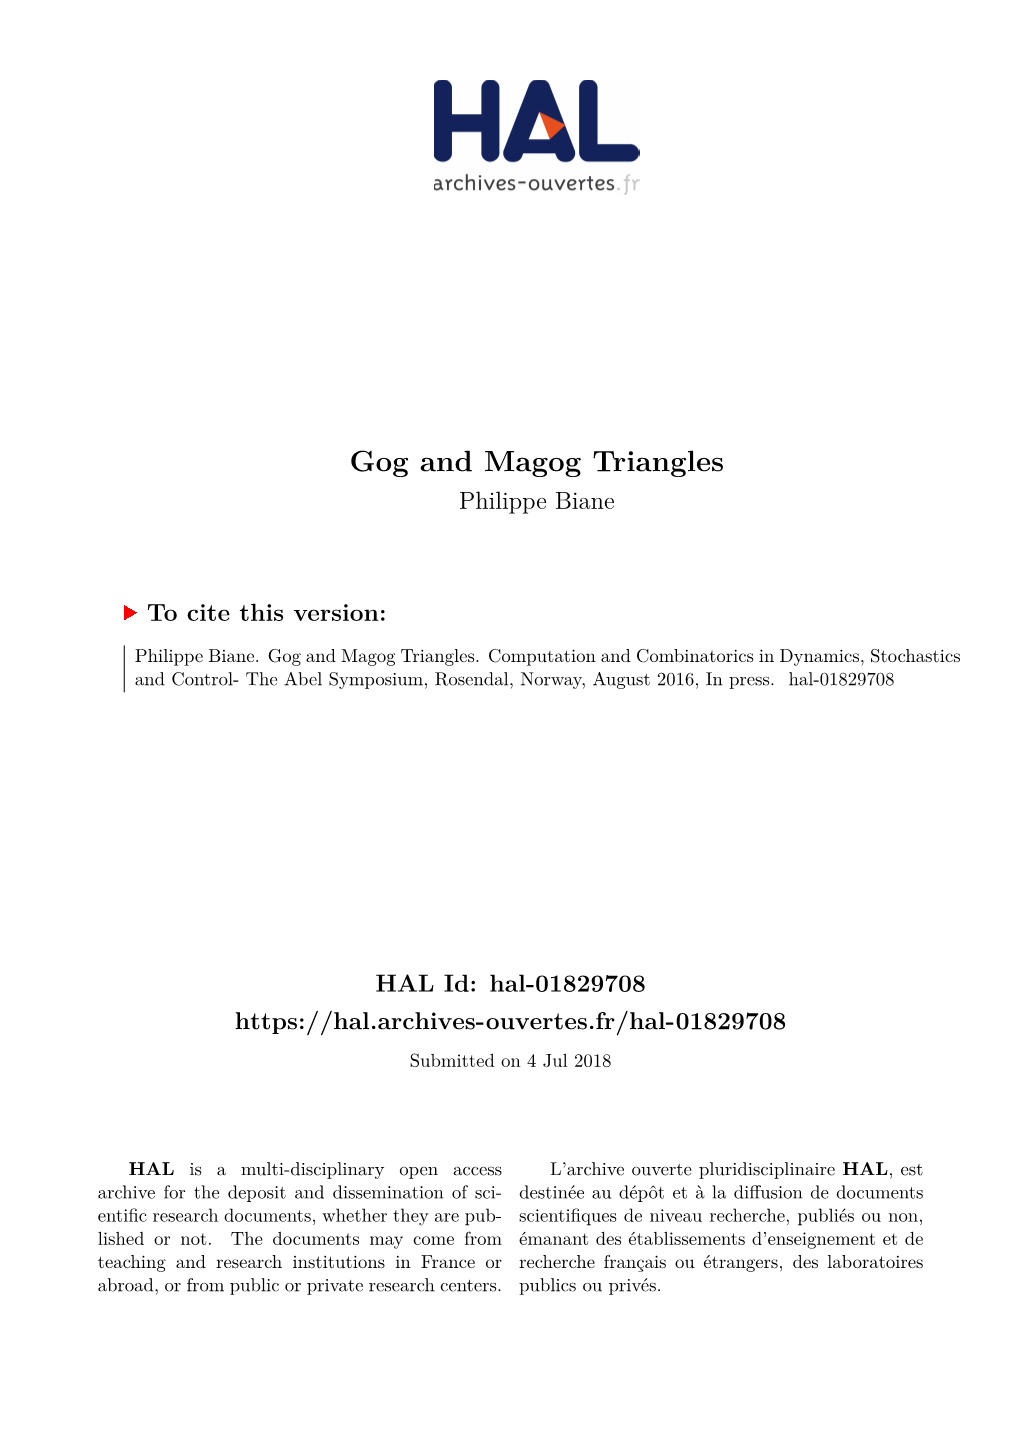 Gog and Magog Triangles Philippe Biane